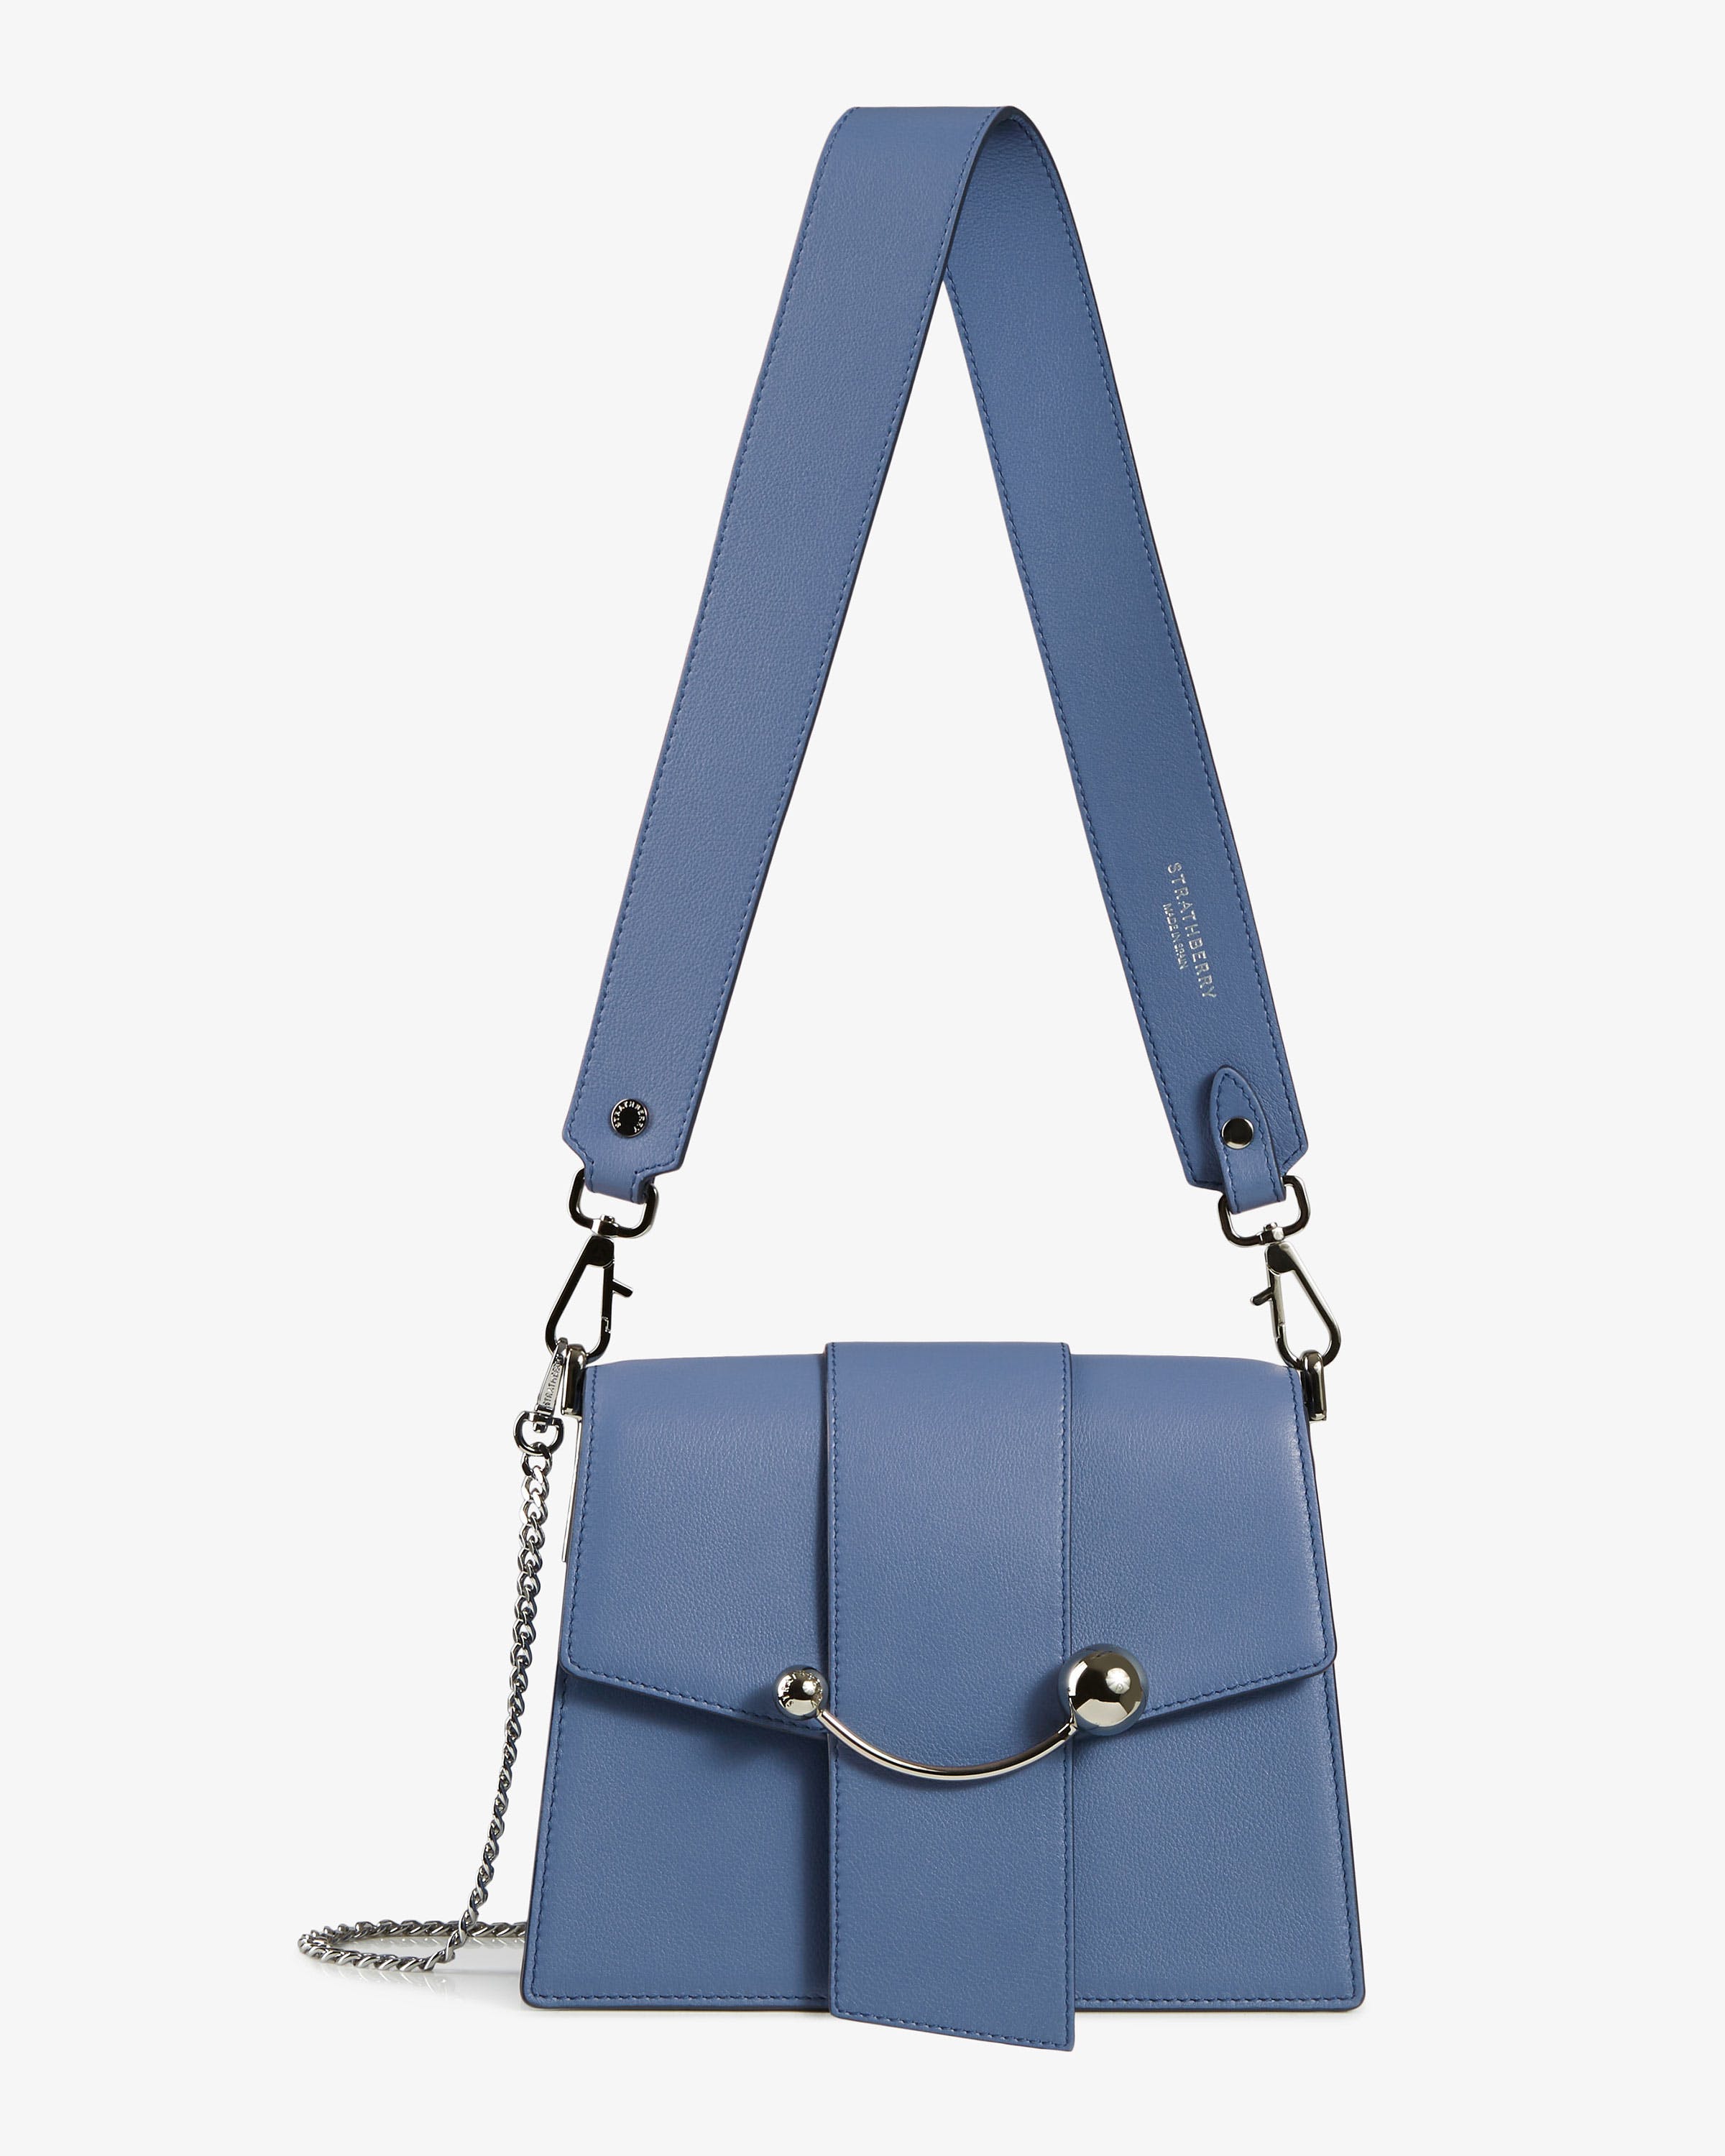 Strathberry - Box Crescent - Leather Shoulder Bag - Blue | Strathberry